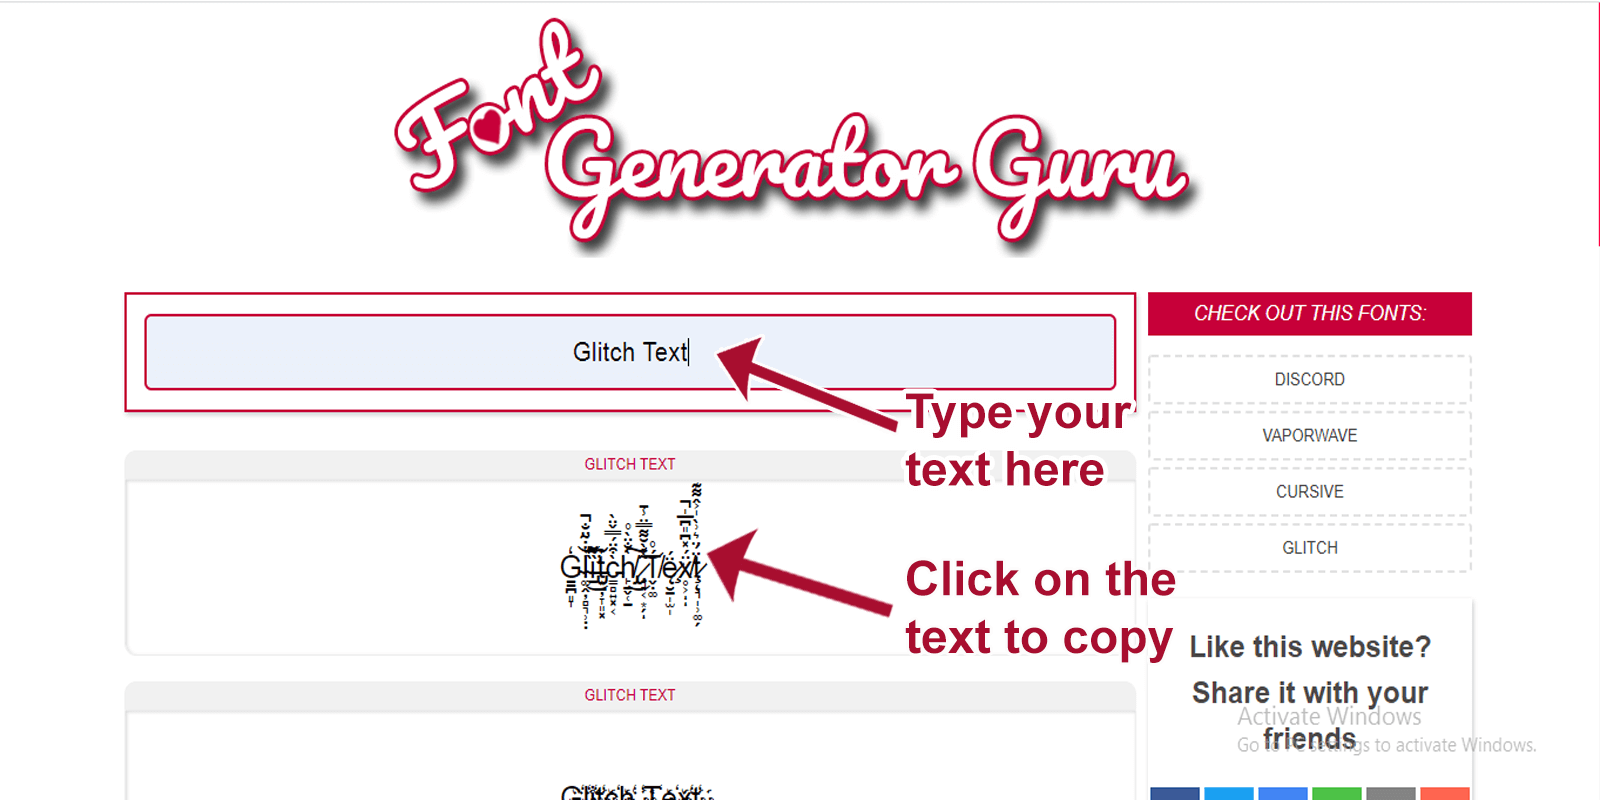 Glitch TEXT Generator ➜ #𝟙😍『 Ⓒⓞⓟⓨ 𝖆𝖓𝖉 ℙ𝕒𝕤𝕥𝕖 』